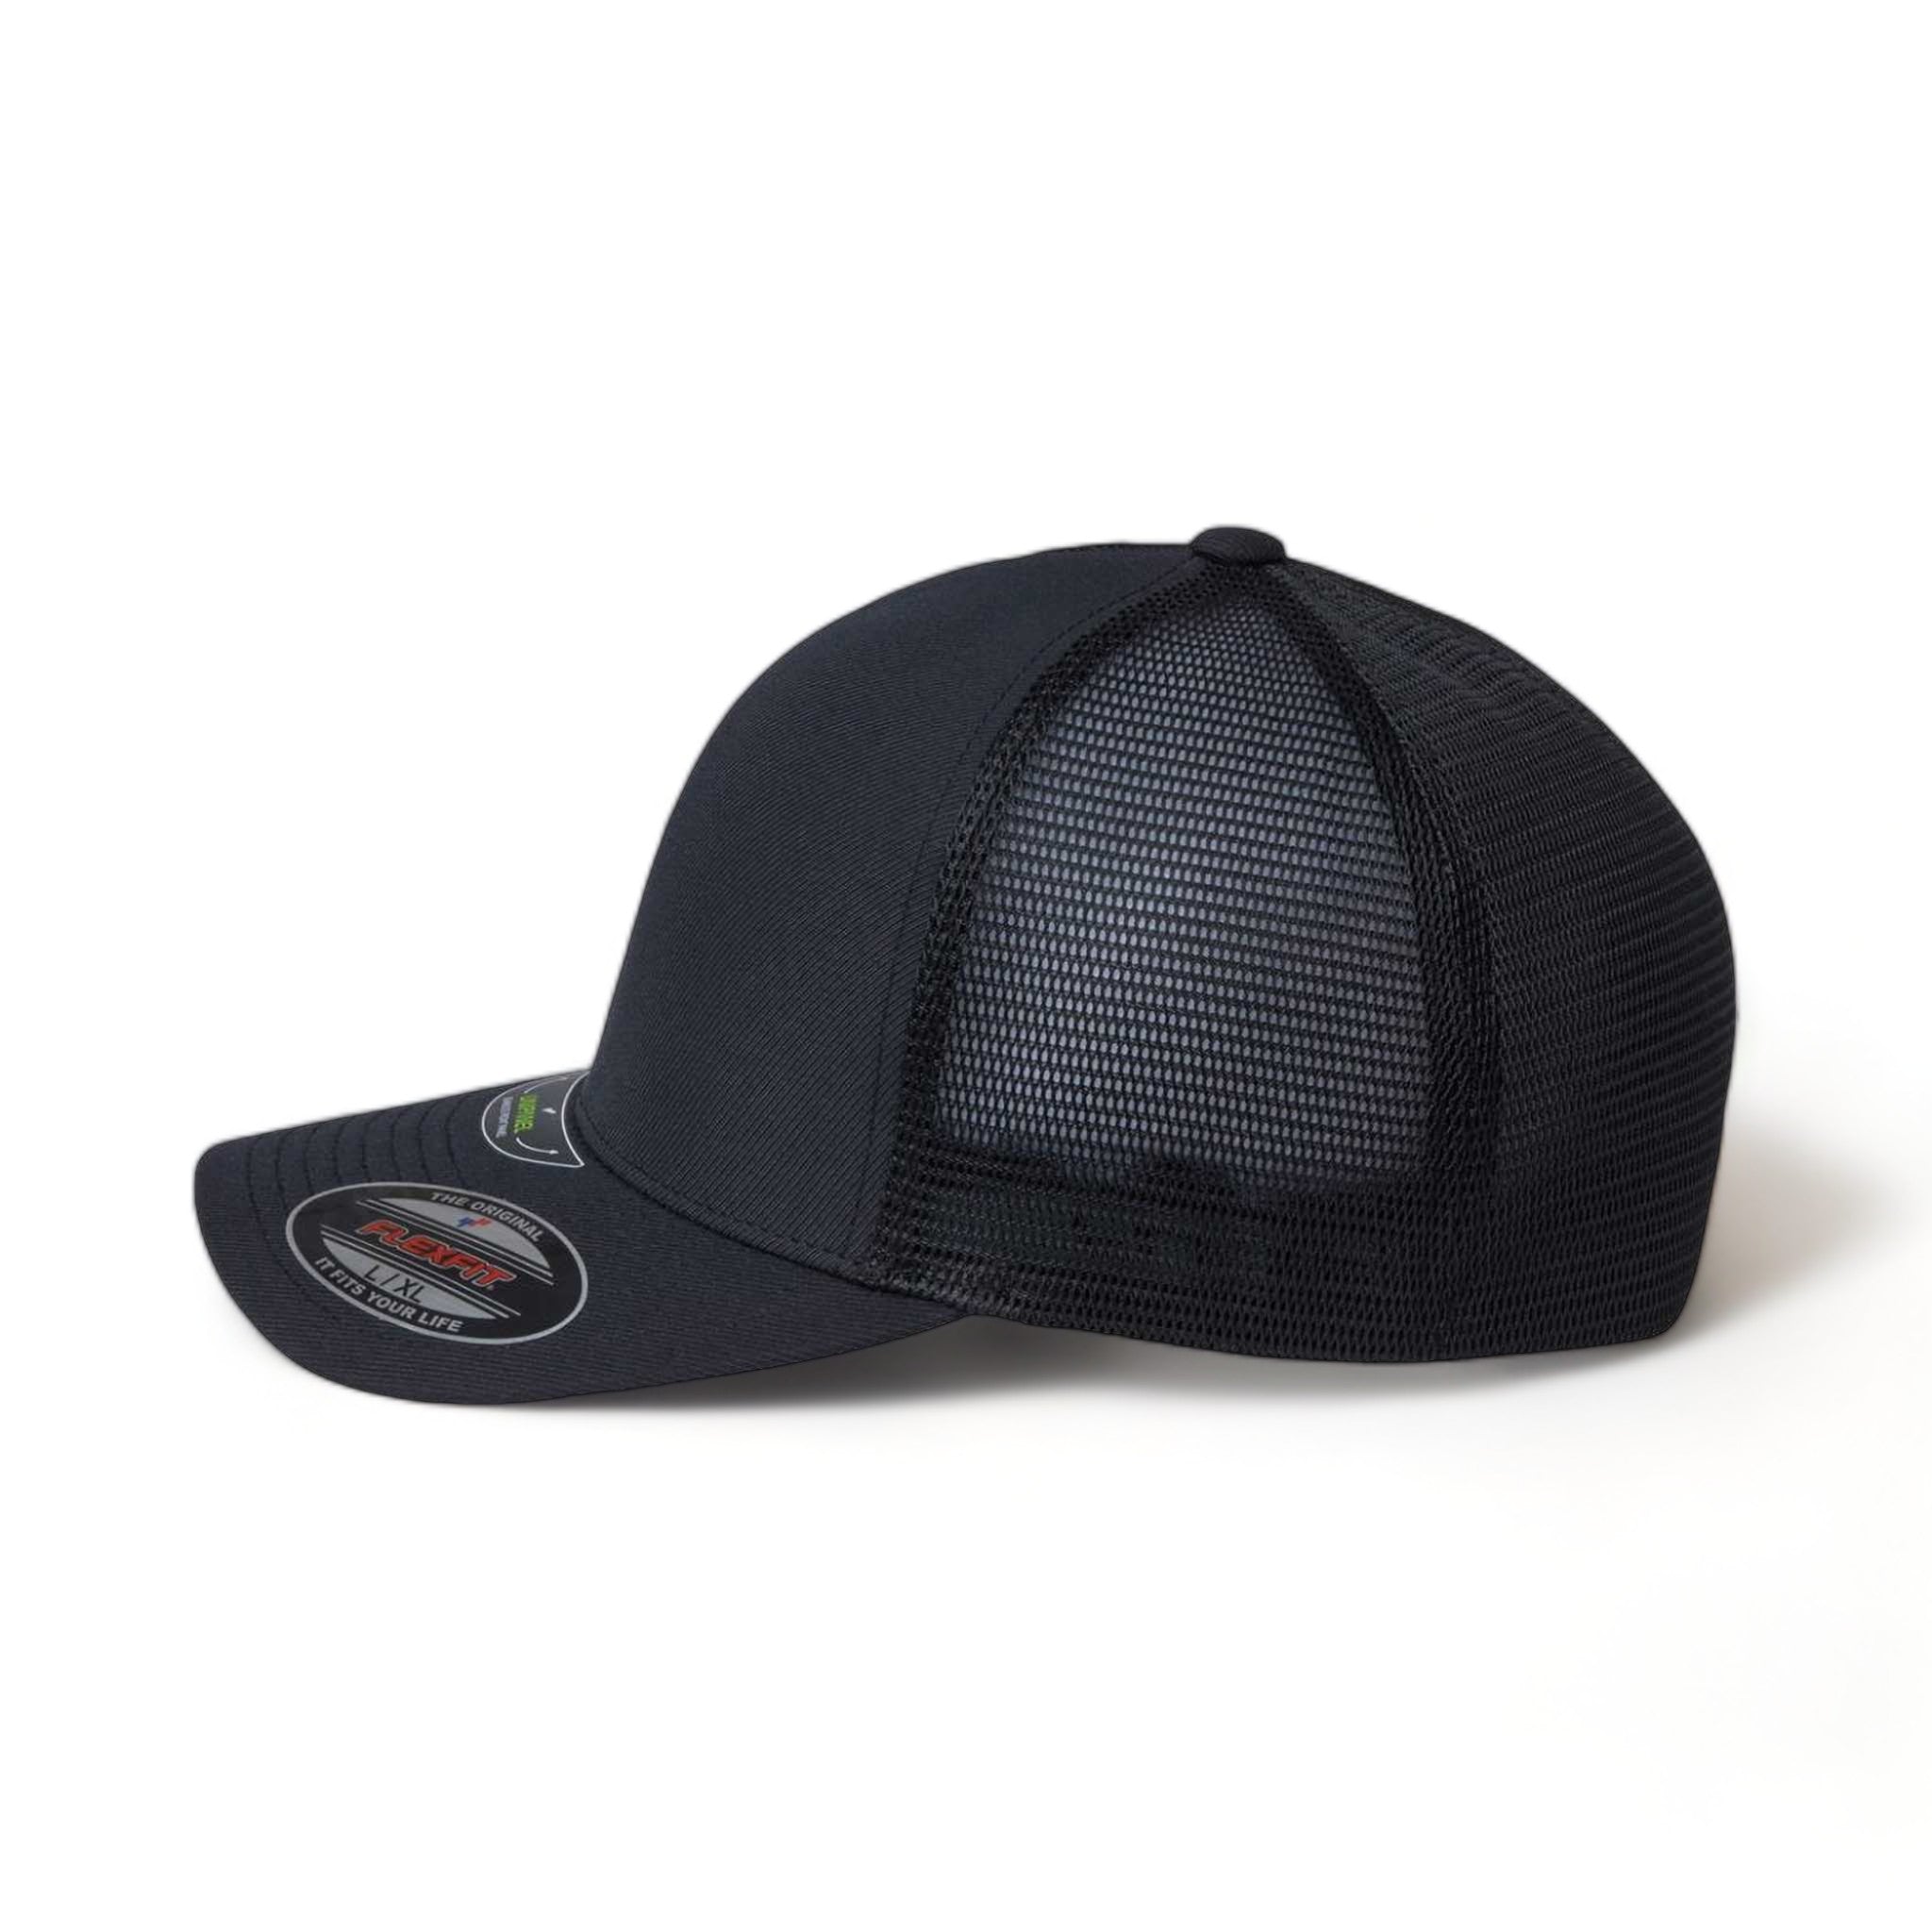 Side view of Flexfit 5511UP custom hat in black